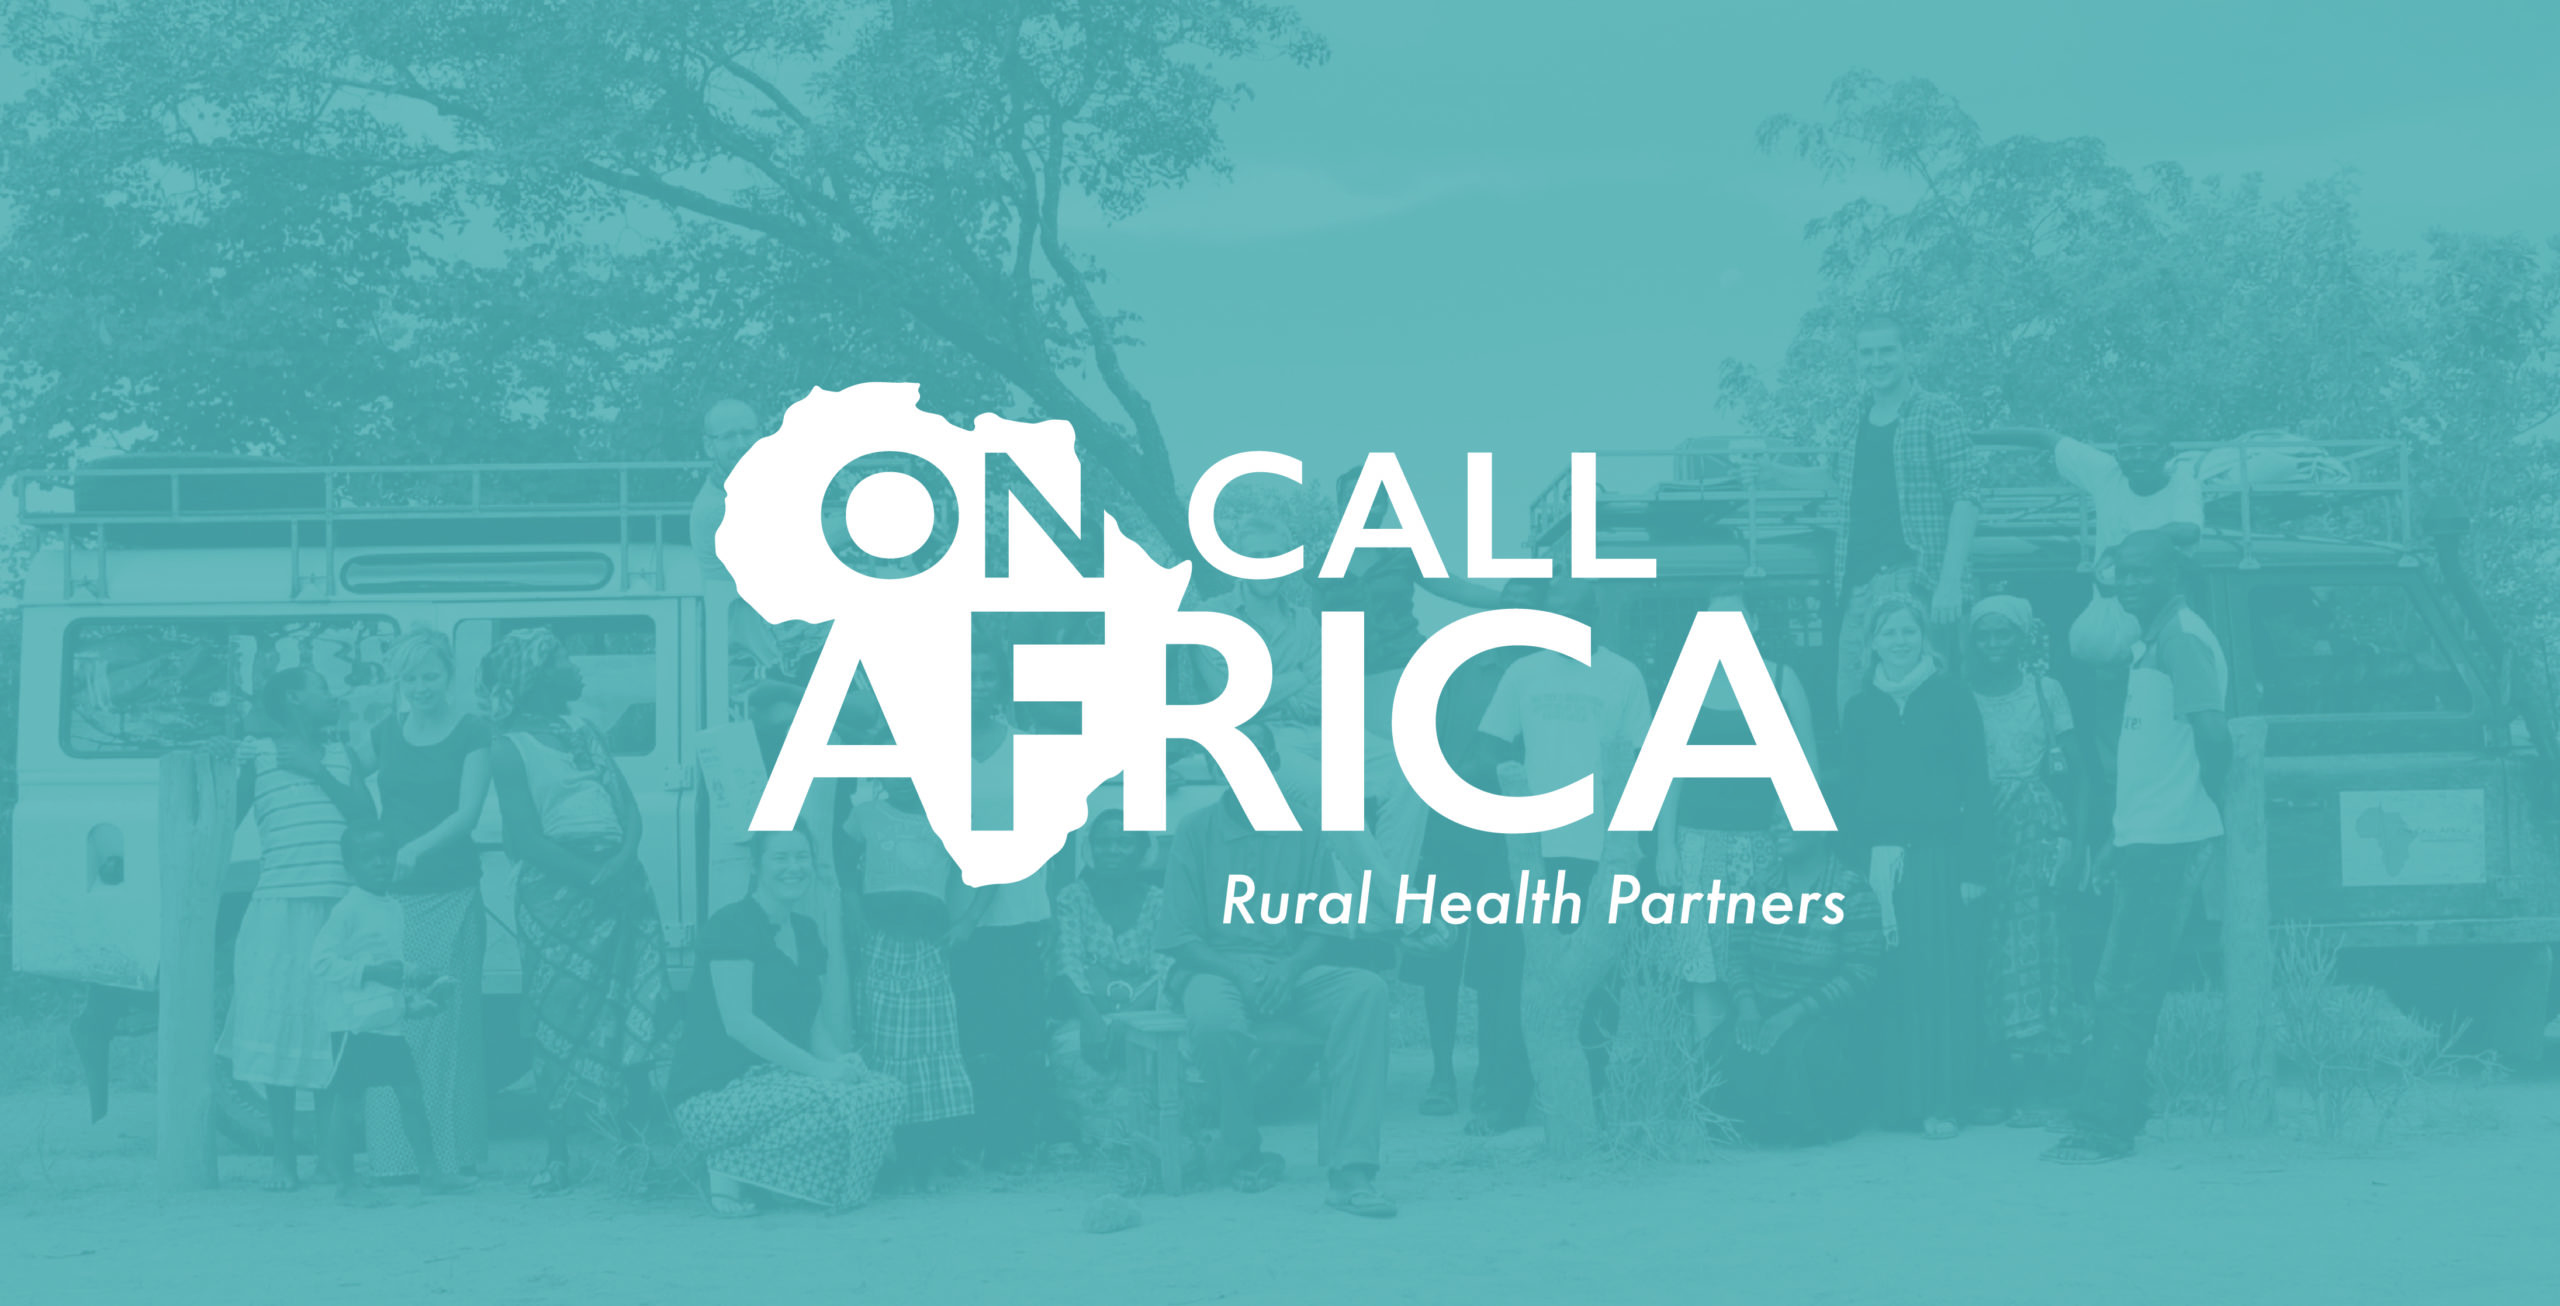 On call Africa Logo Designs